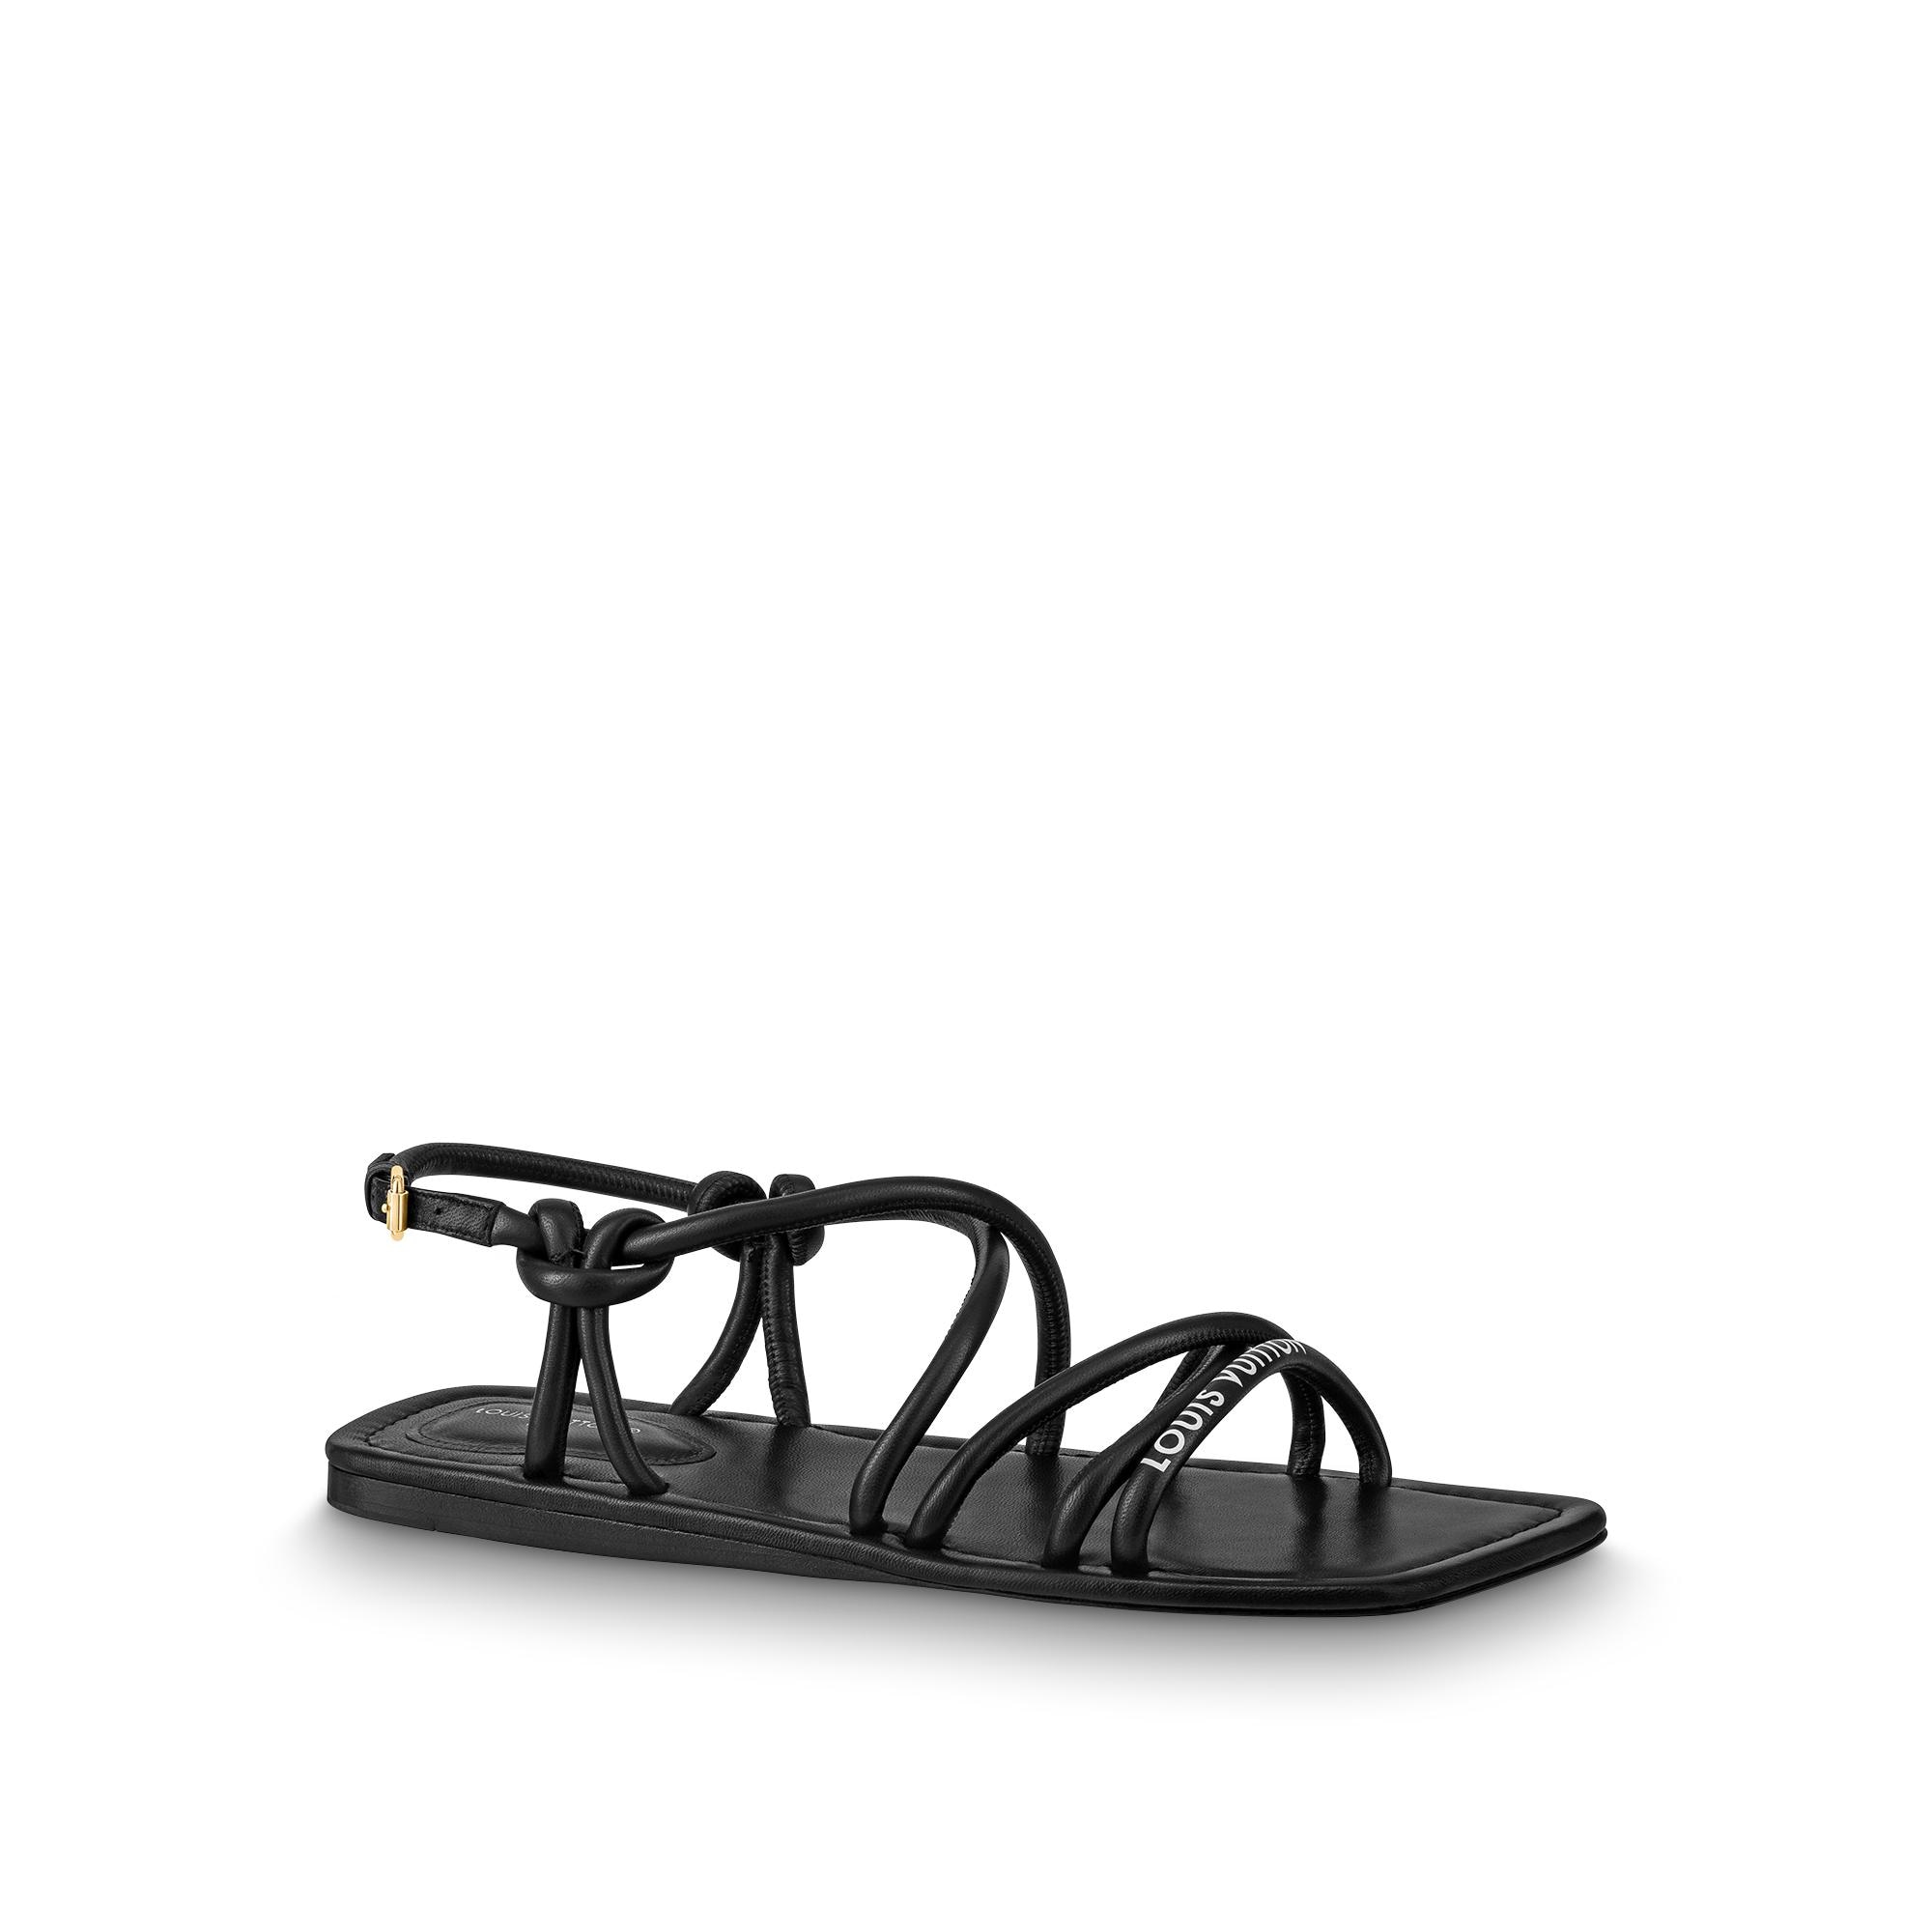 Louis Vuitton 1ABW6W LV Sunset Comfort Flat Sandal , Black, 34.5